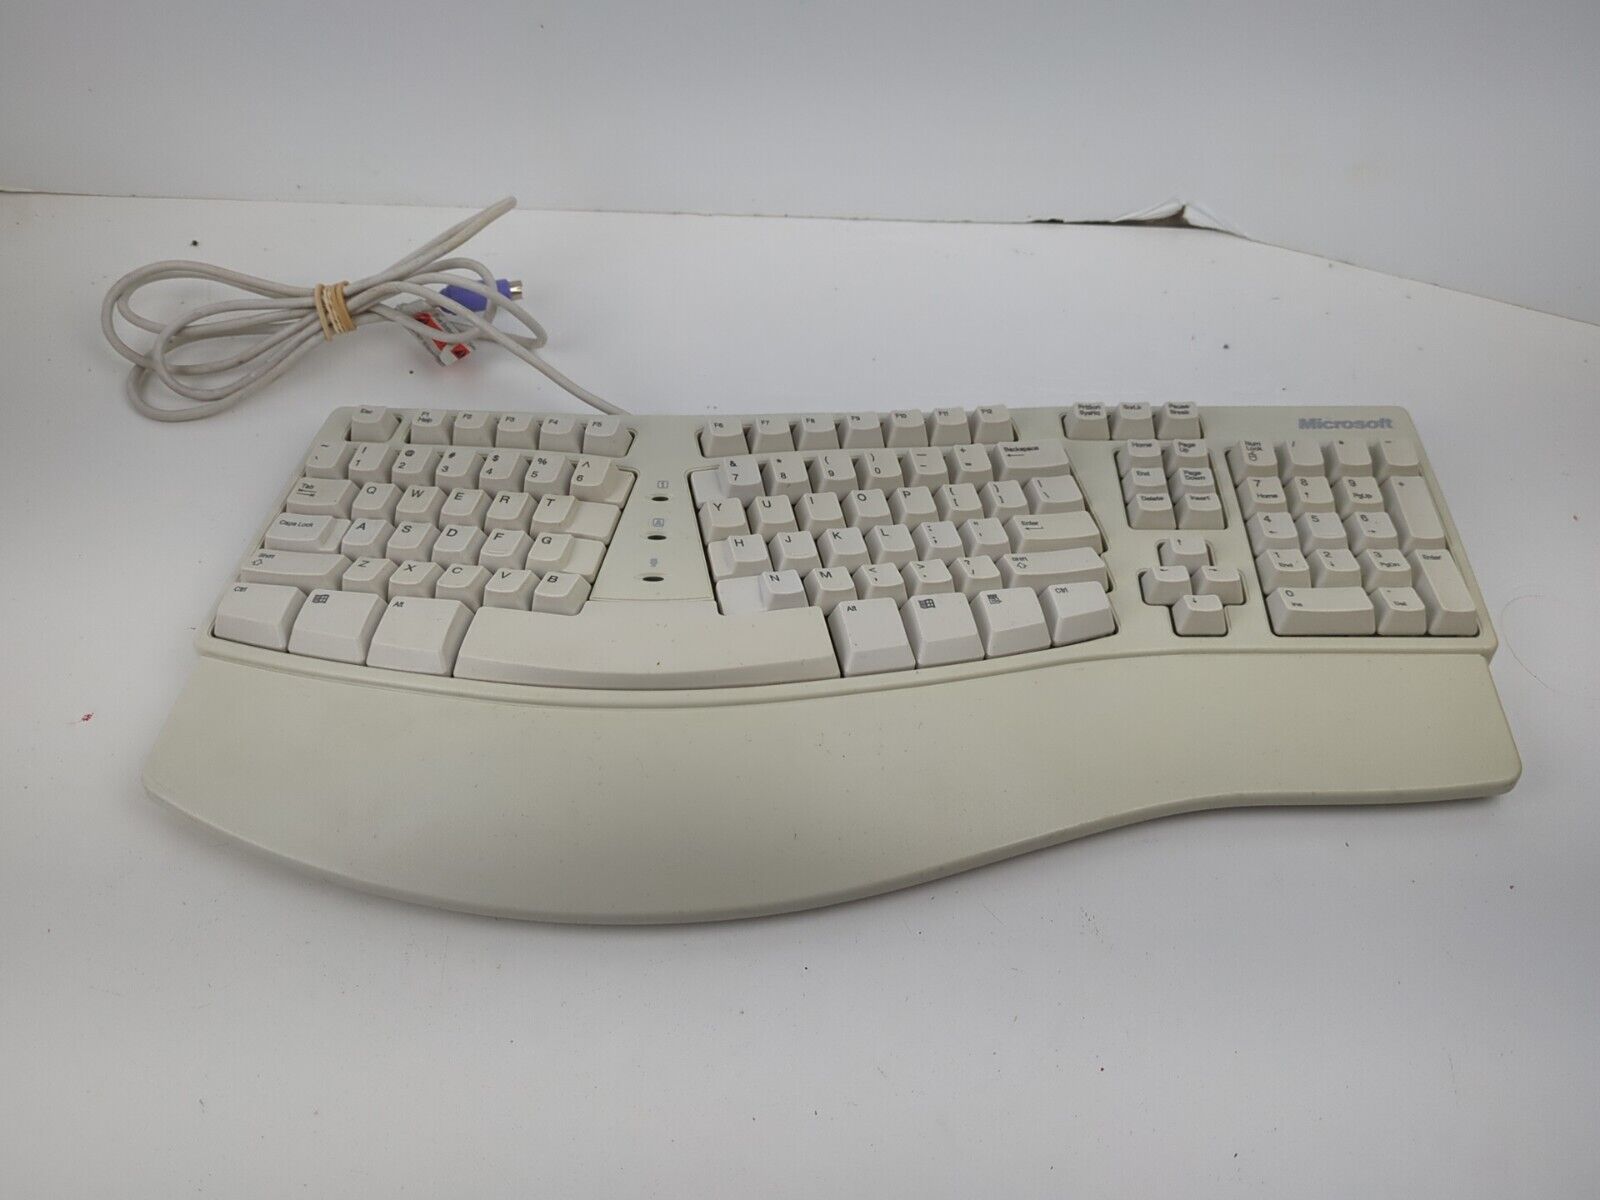 Vintage Microsoft Ergonomic Natural Keyboard Elite Split X06 19331 White PS/2